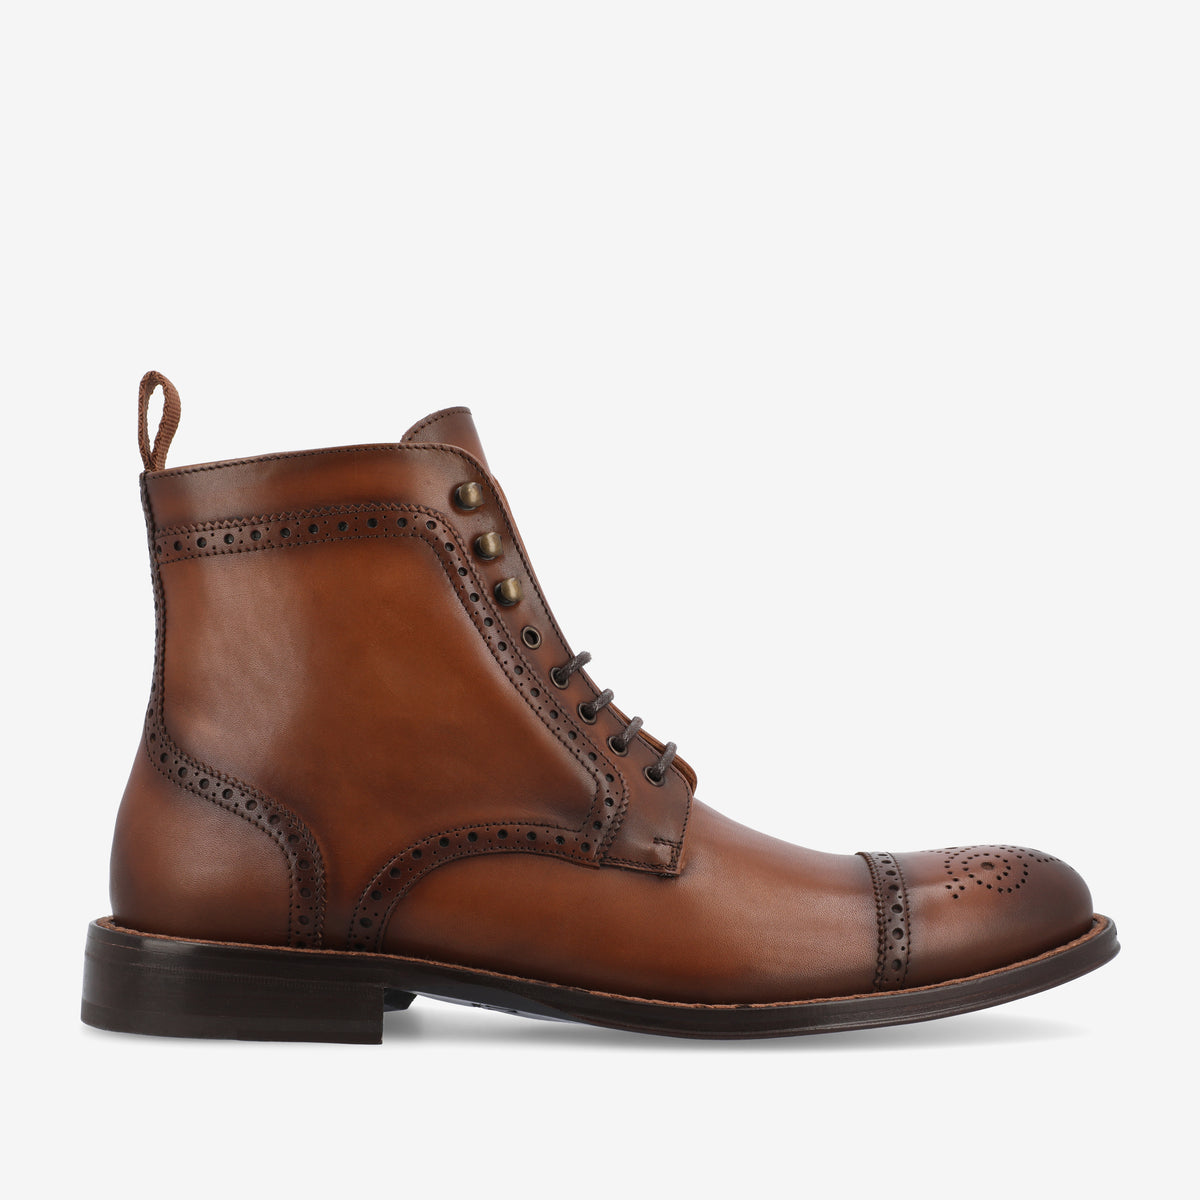 The Noah Boot in Brown